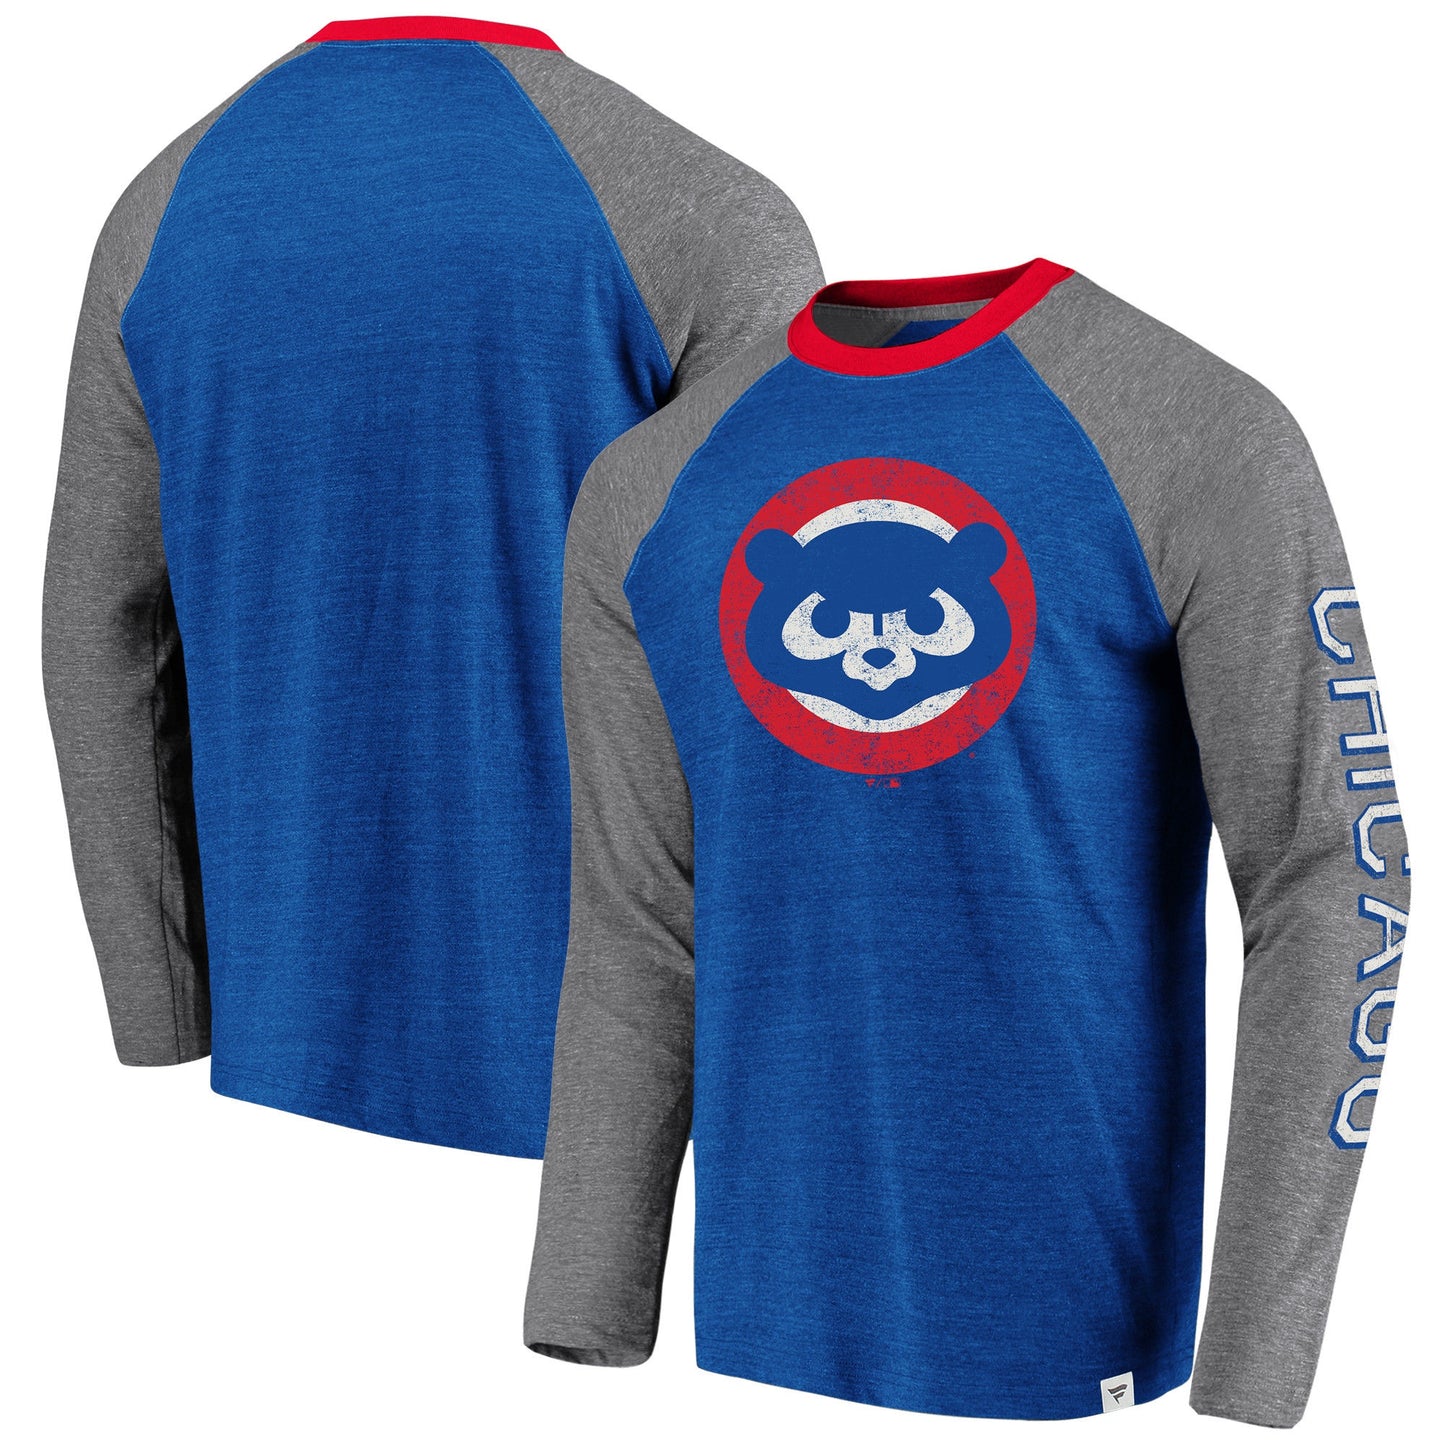 Men's Chicago Cubs Fanatics Branded Royal/Gray True Classics Long Sleeve Raglan T-Shirt